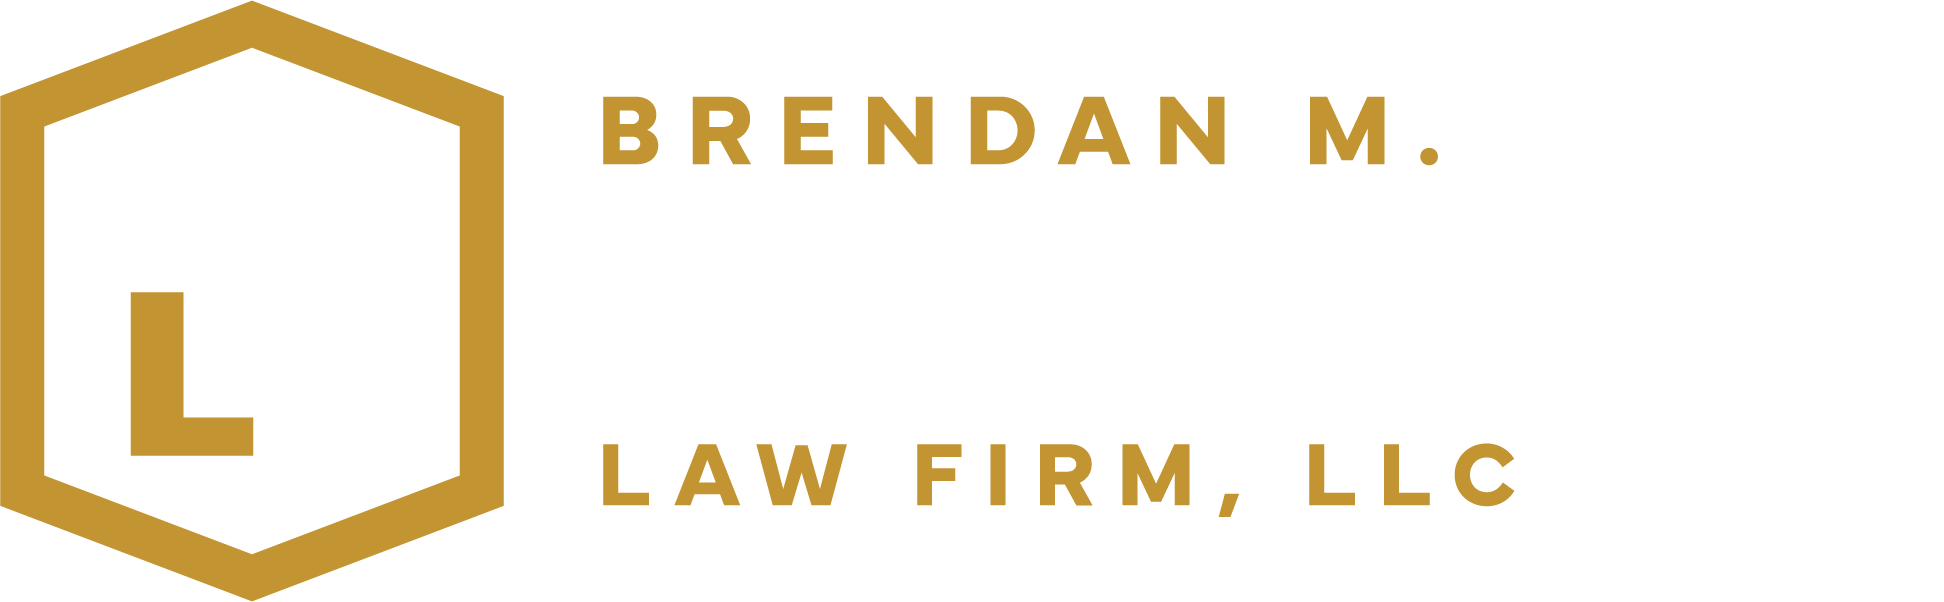 Brendan Delaney Law LLC.